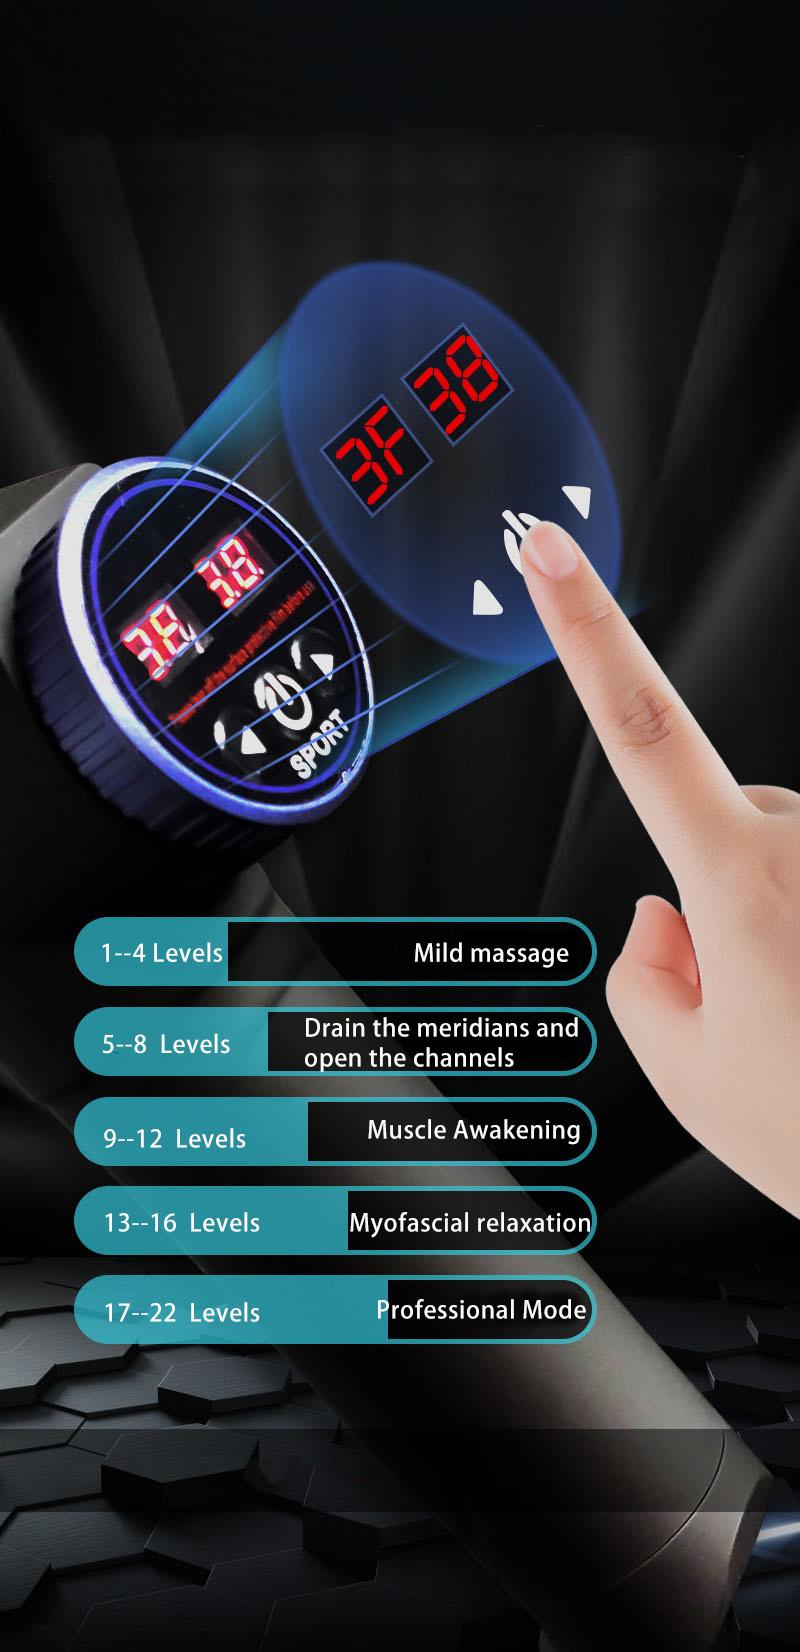 Cm2352 Pocket Handheld Vibration Fascia Massage Gun